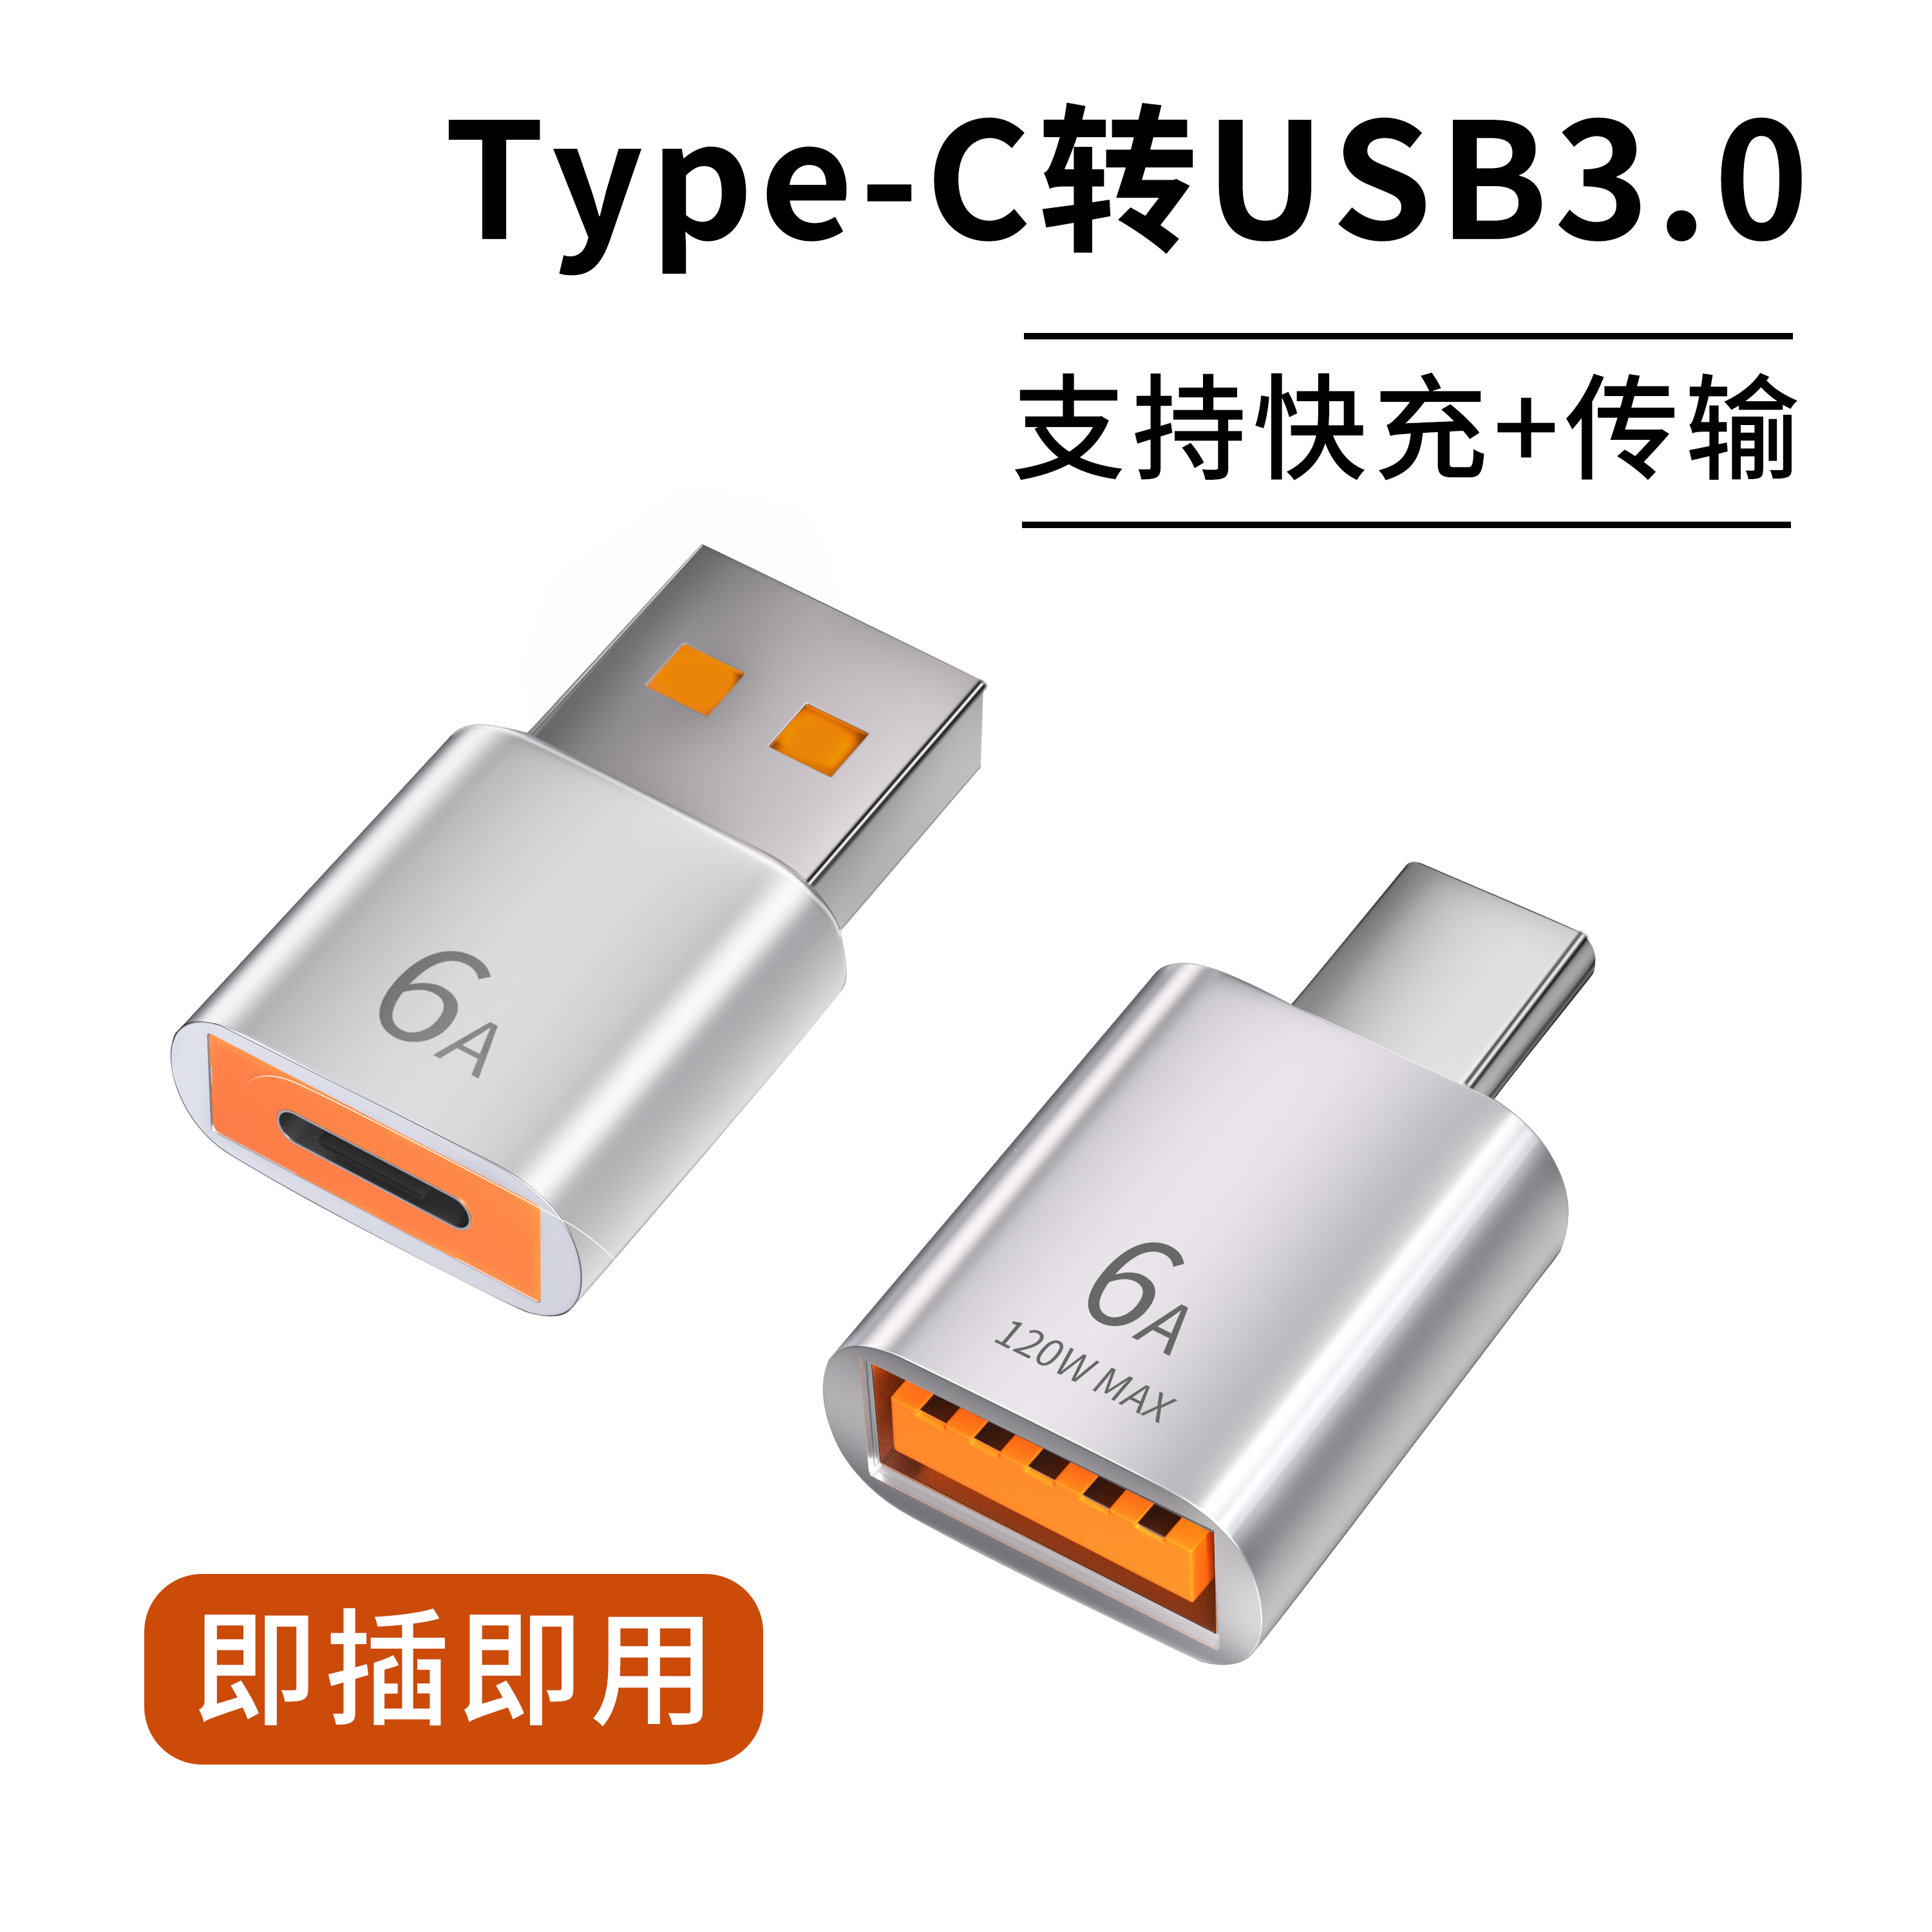 typec转USB3.0转接头otg转换器适用苹果15小米oppo华为vivo手机连接U盘键盘鼠标PD充电快充平板笔记本电脑